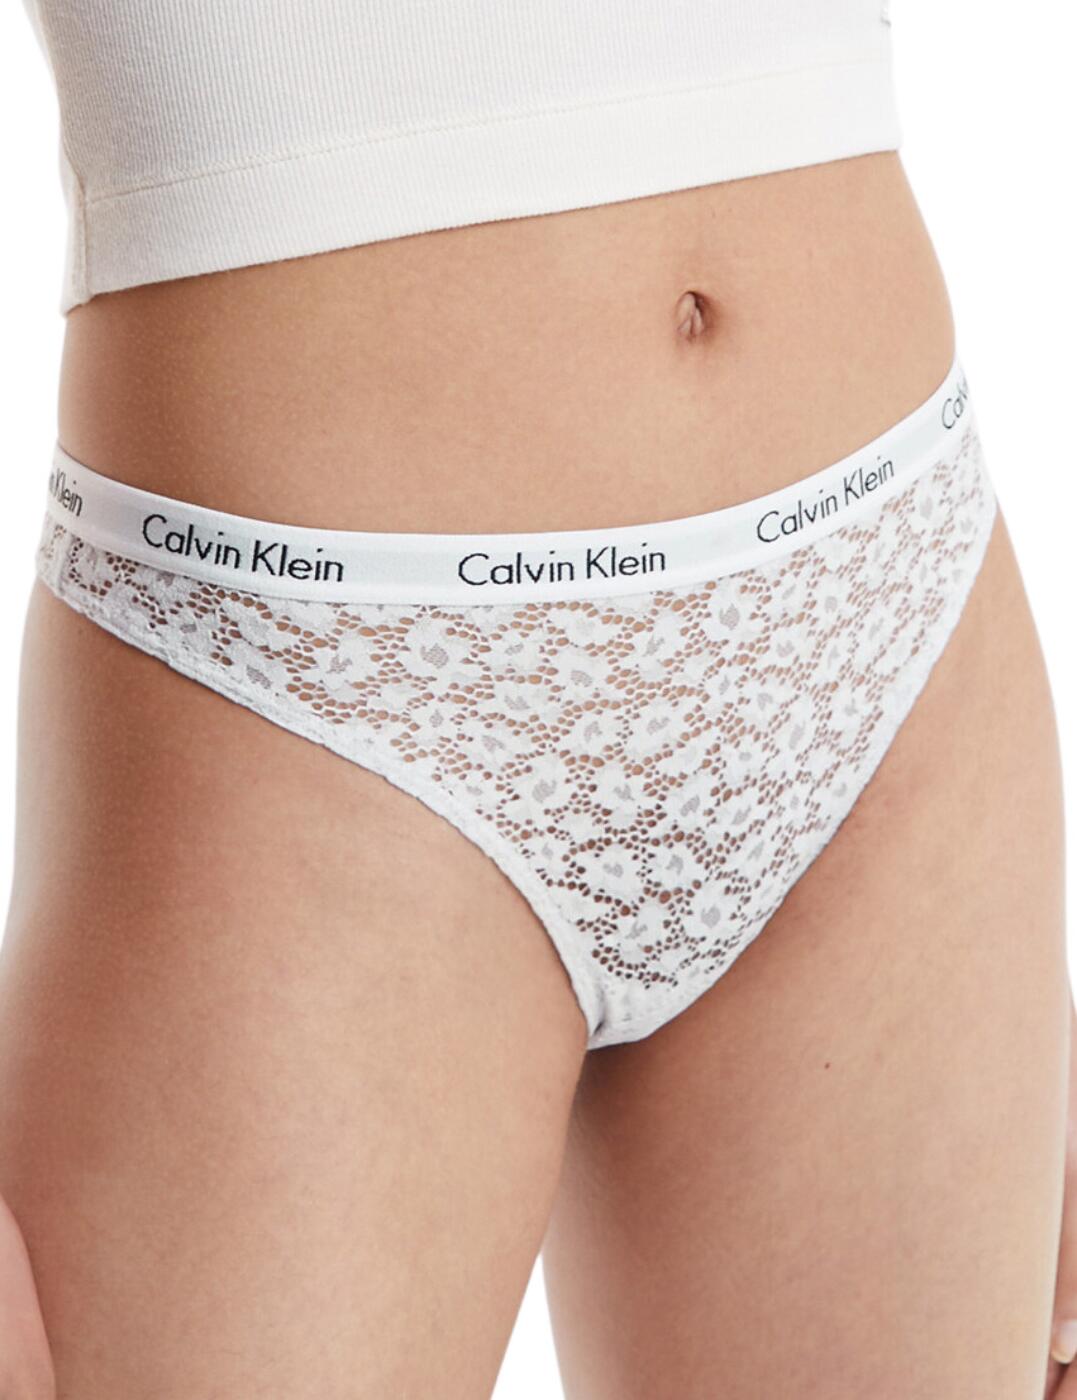 Calvin Klein size large platinum grey Lacey Brazilian Knickers Bnwt Women's